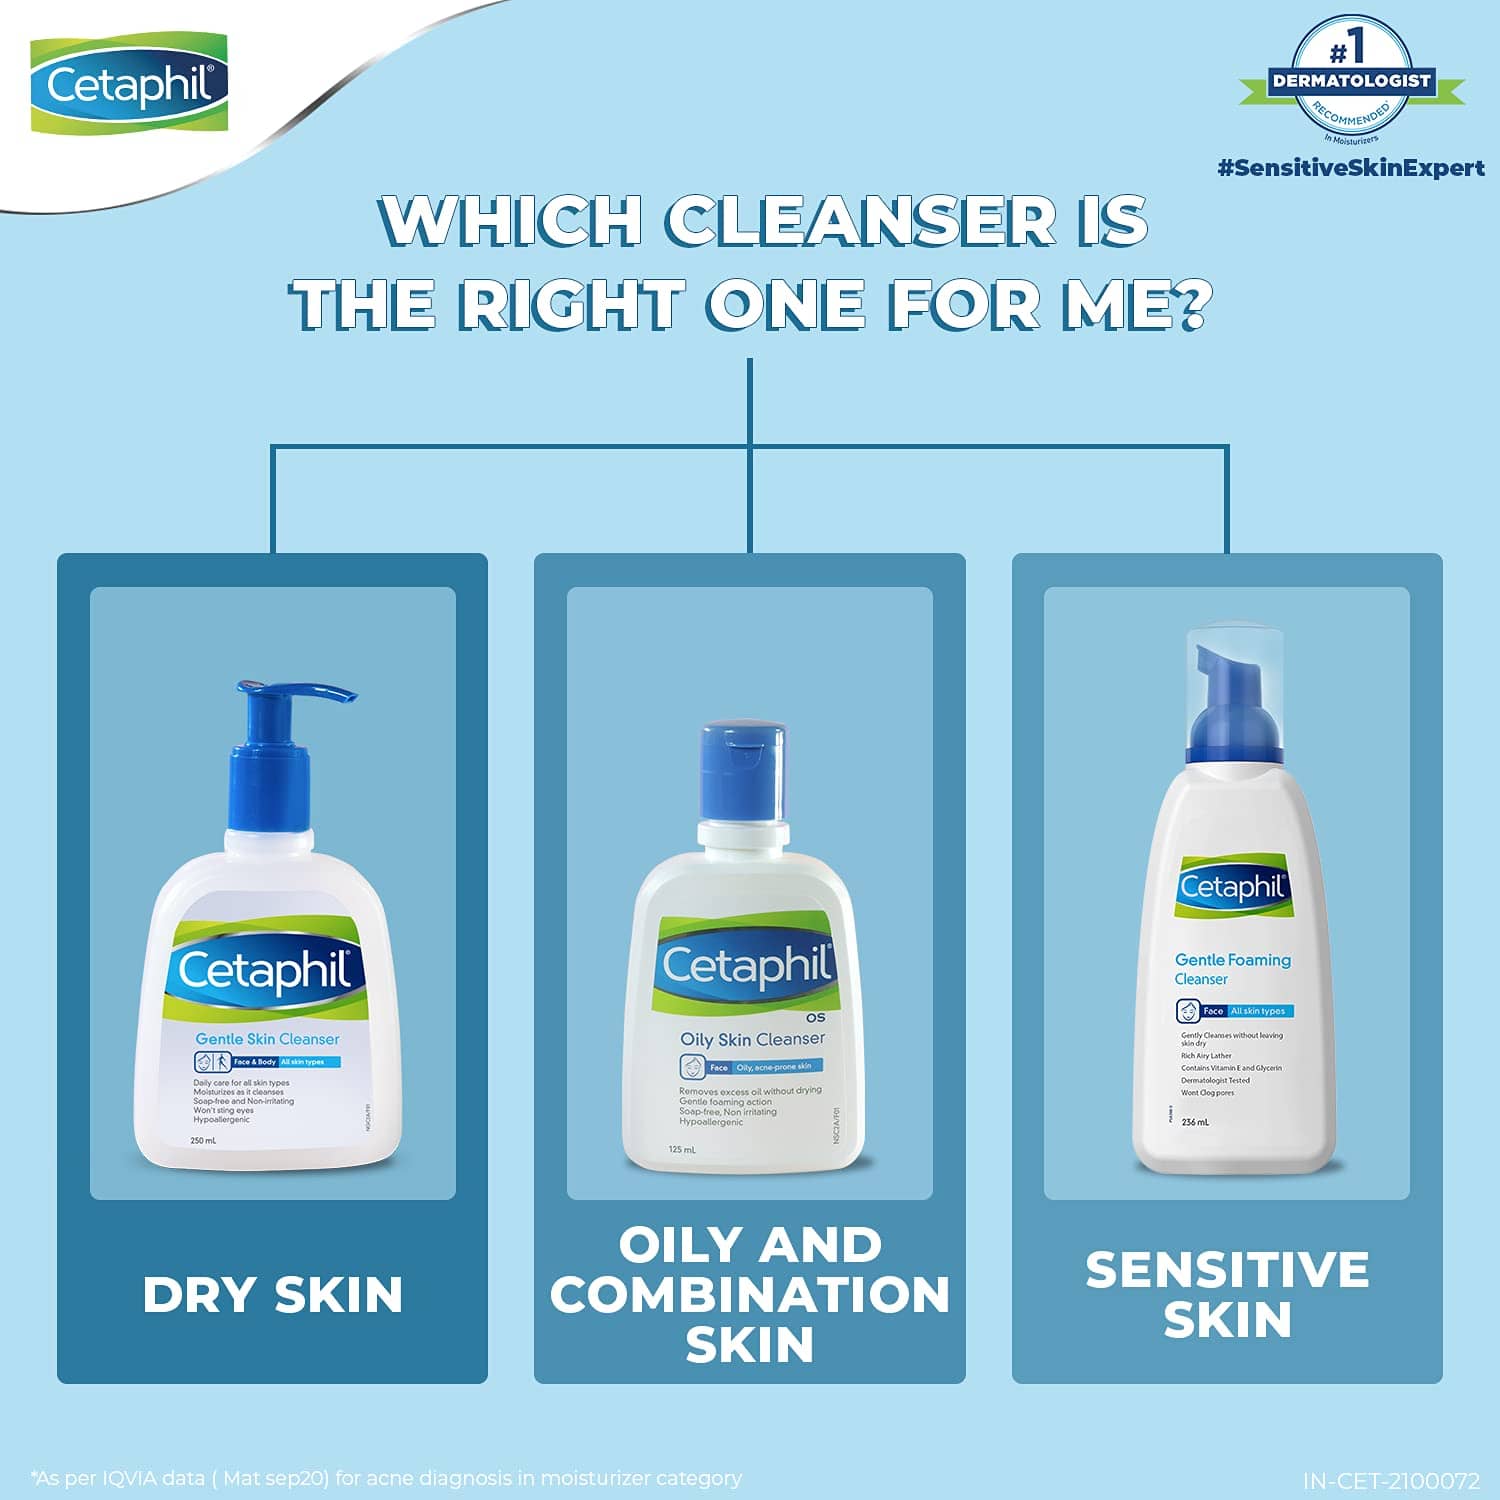 Cetaphil Gentle Skin Cleanser for Dry Sensitive Skin